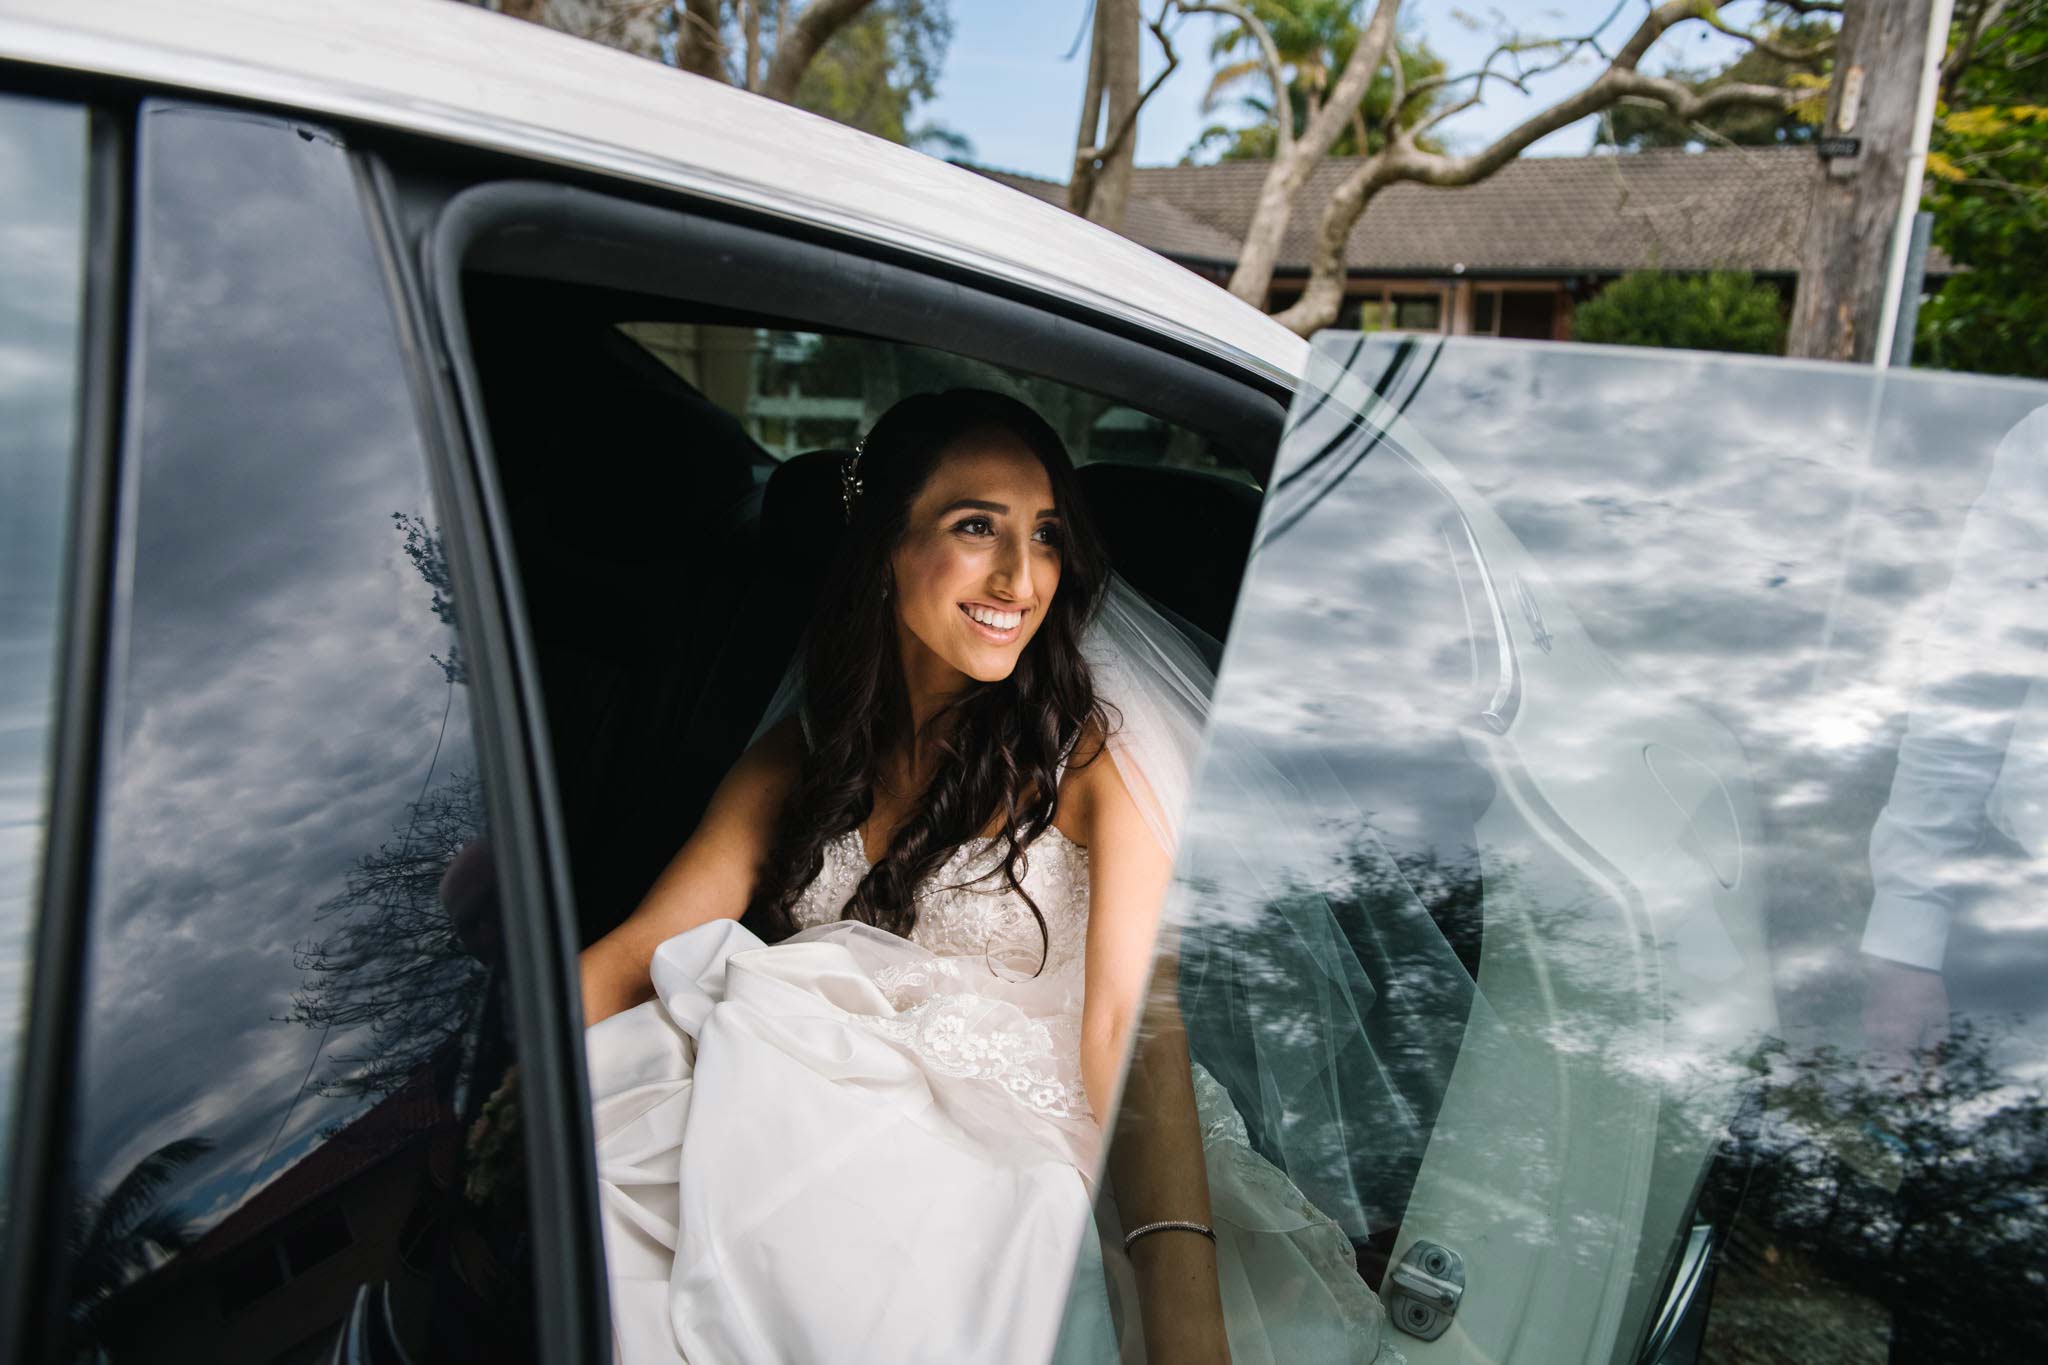 Bride smiling as she climbs into wedding car